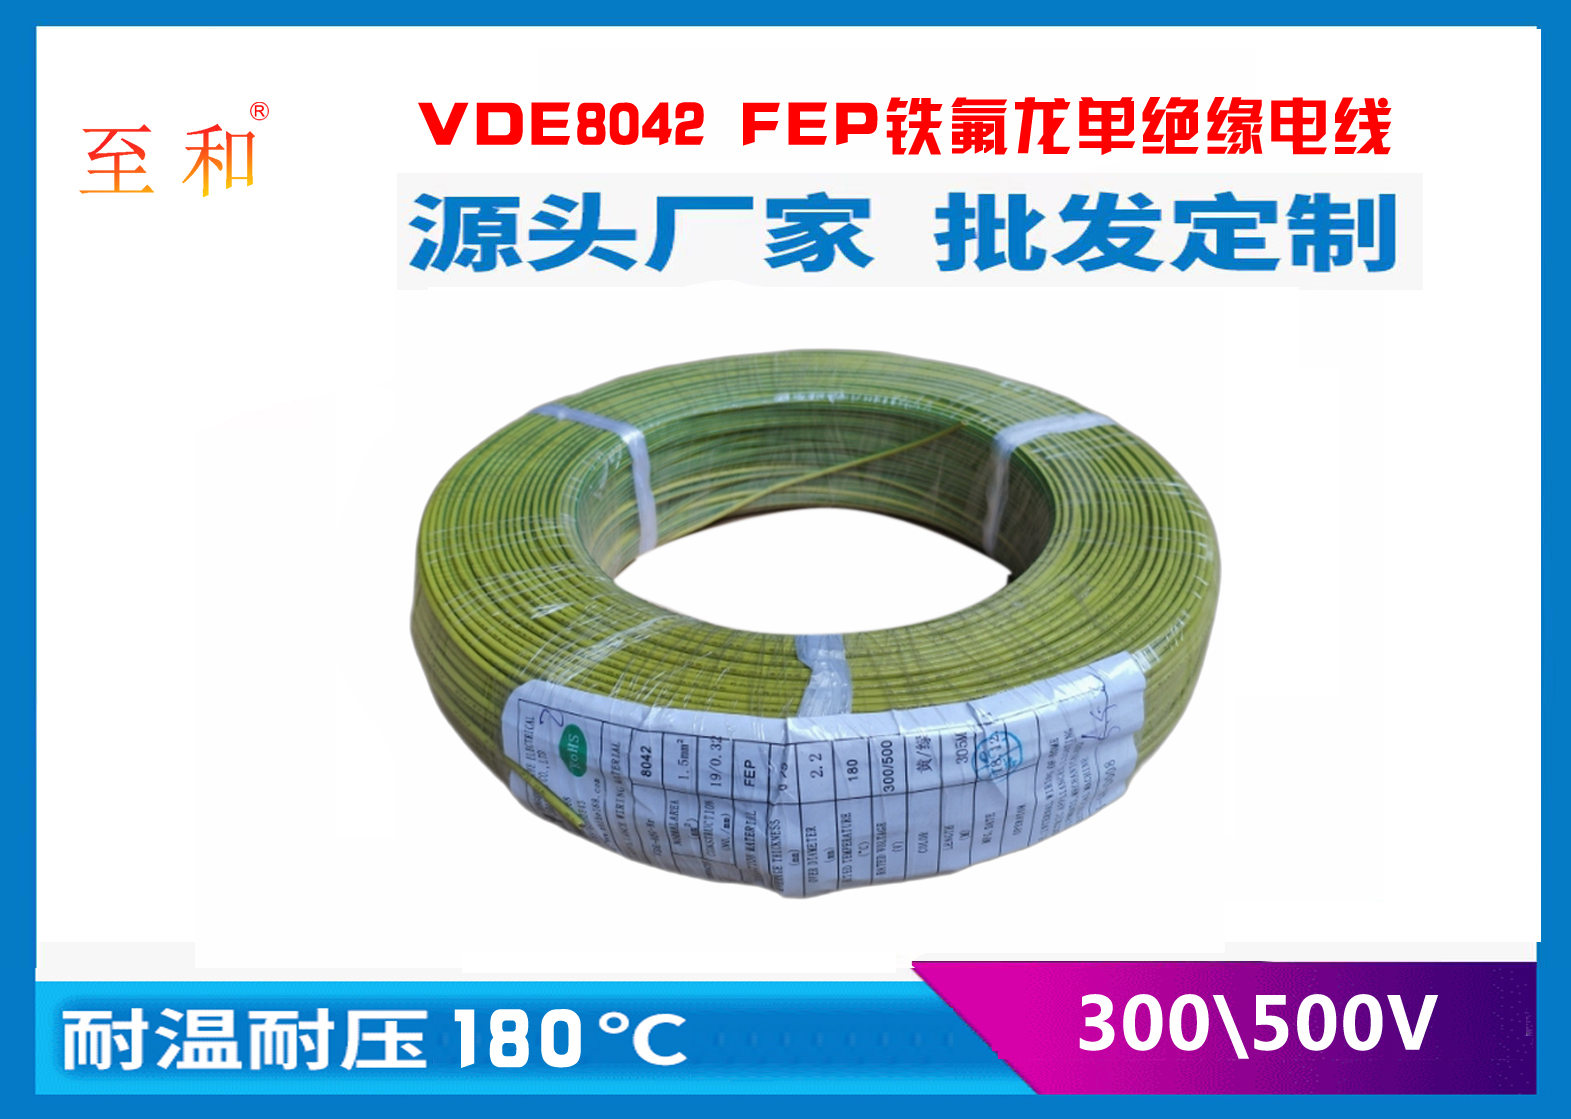 VDE8042 FEP鐵氟龍單絕緣電線